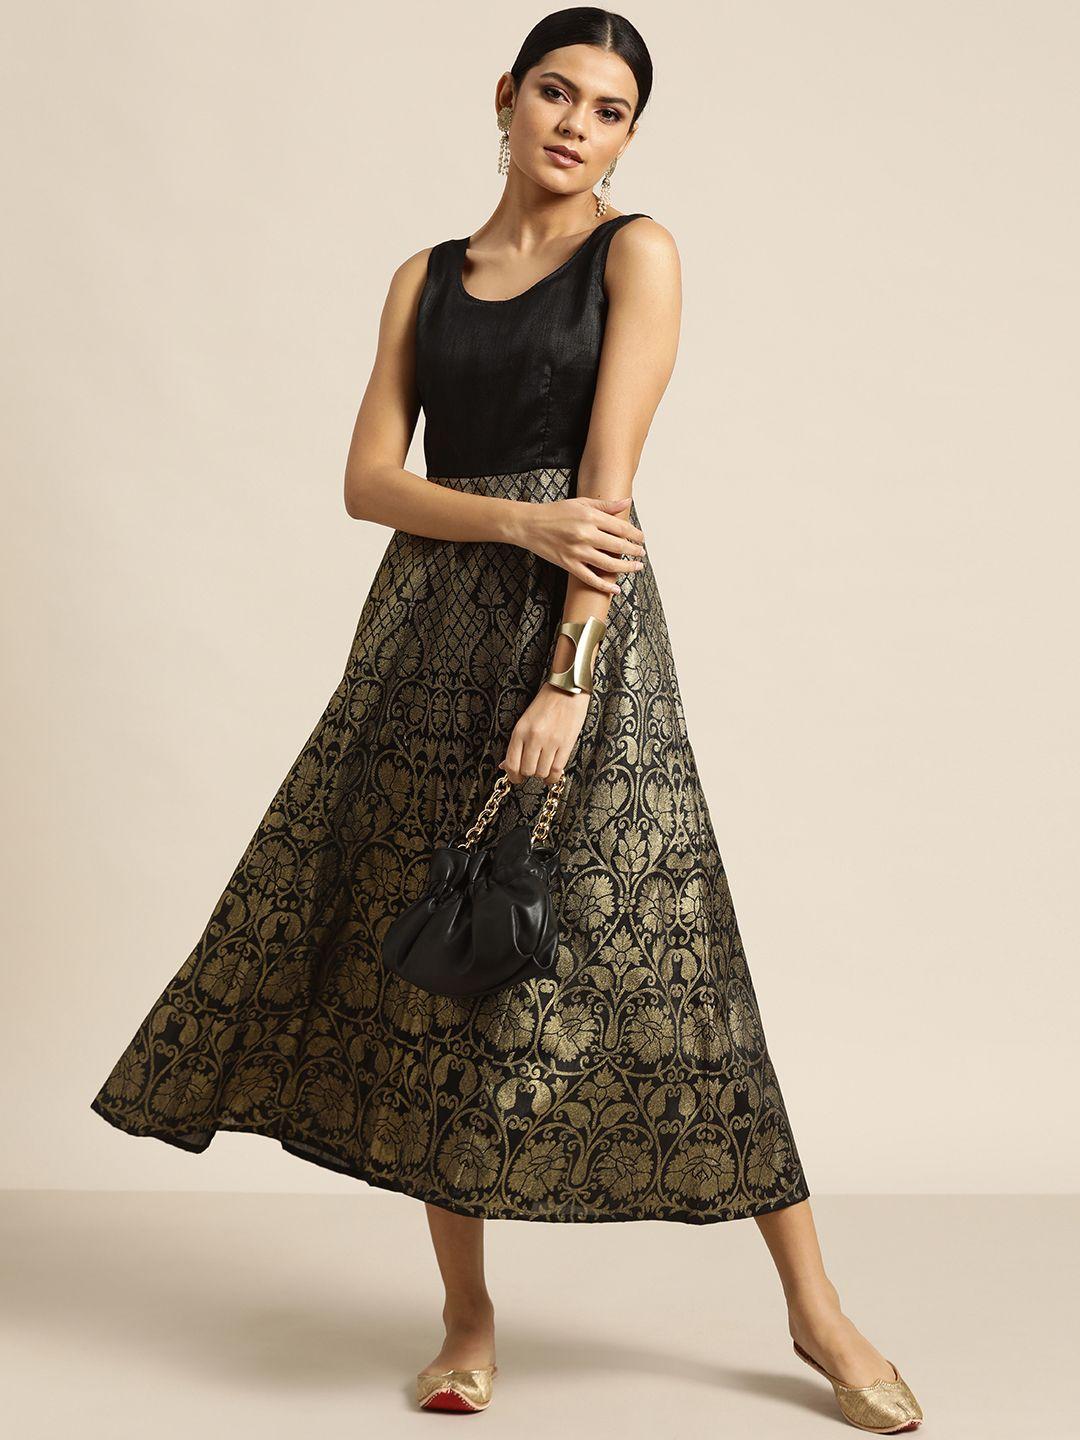 shae by sassafras black & golden foil print ethnic motifs ethnic a-line dress